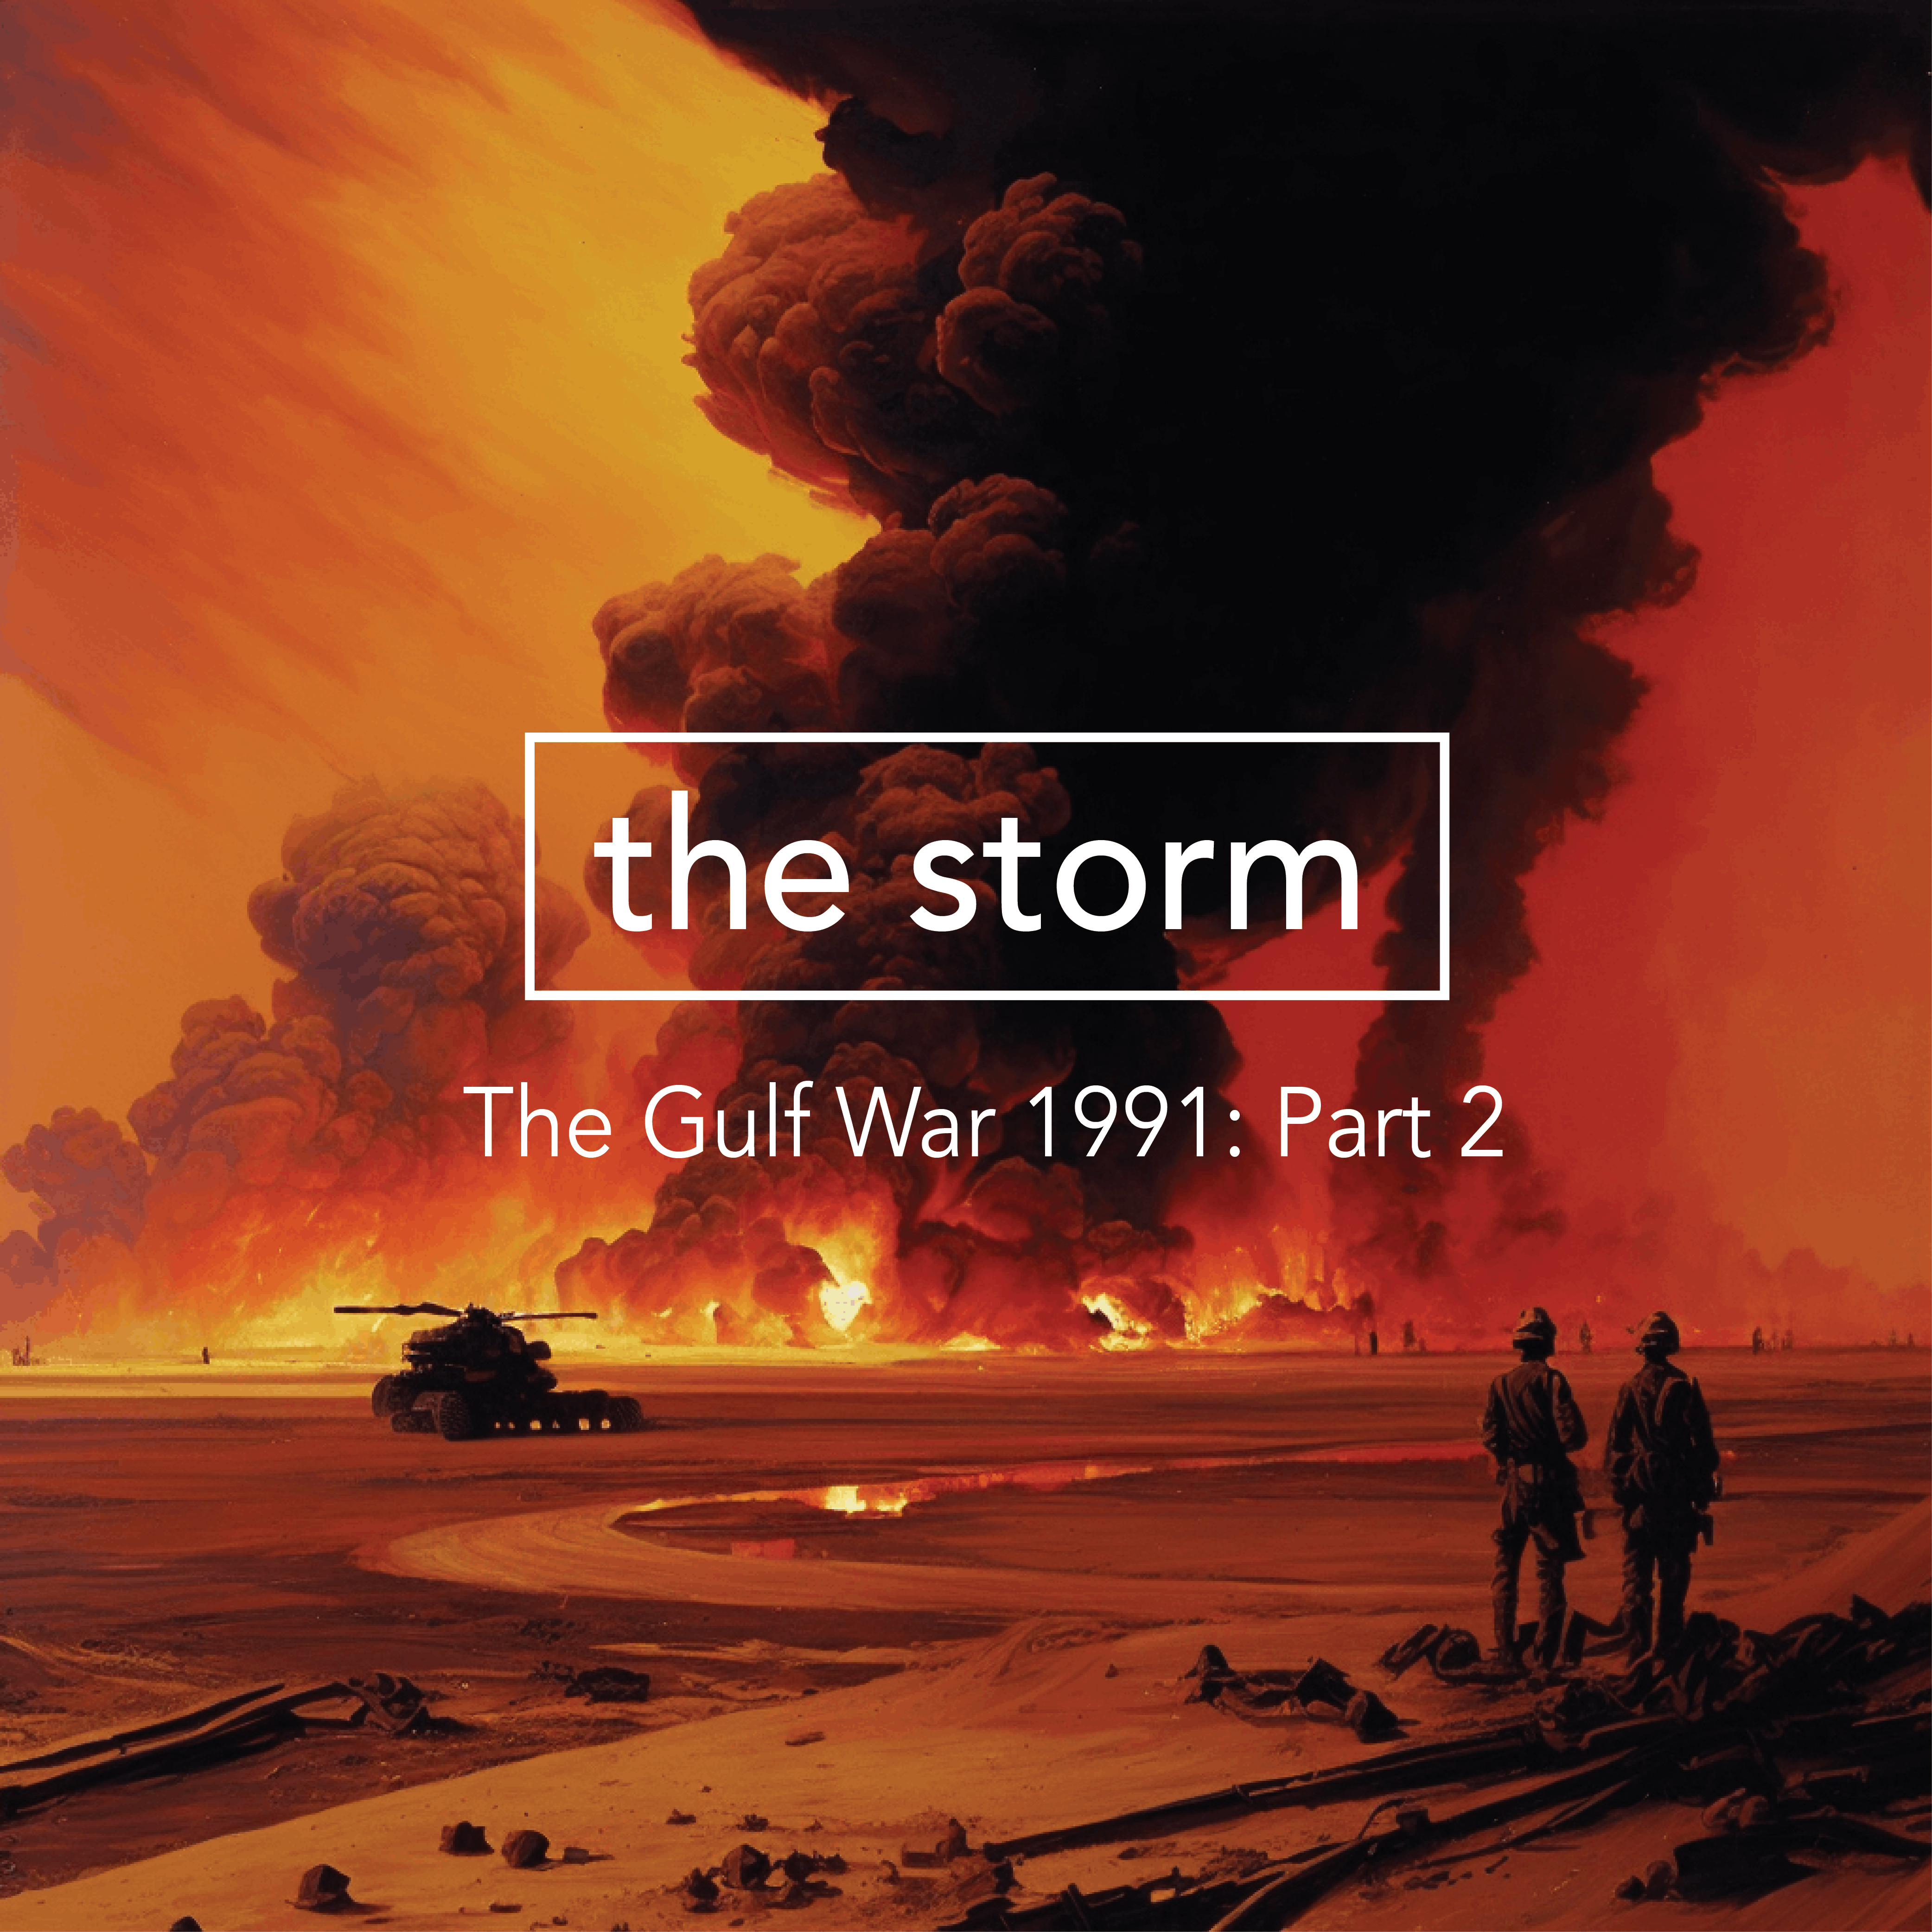 The Gulf War 1991 – Part 2: The Storm